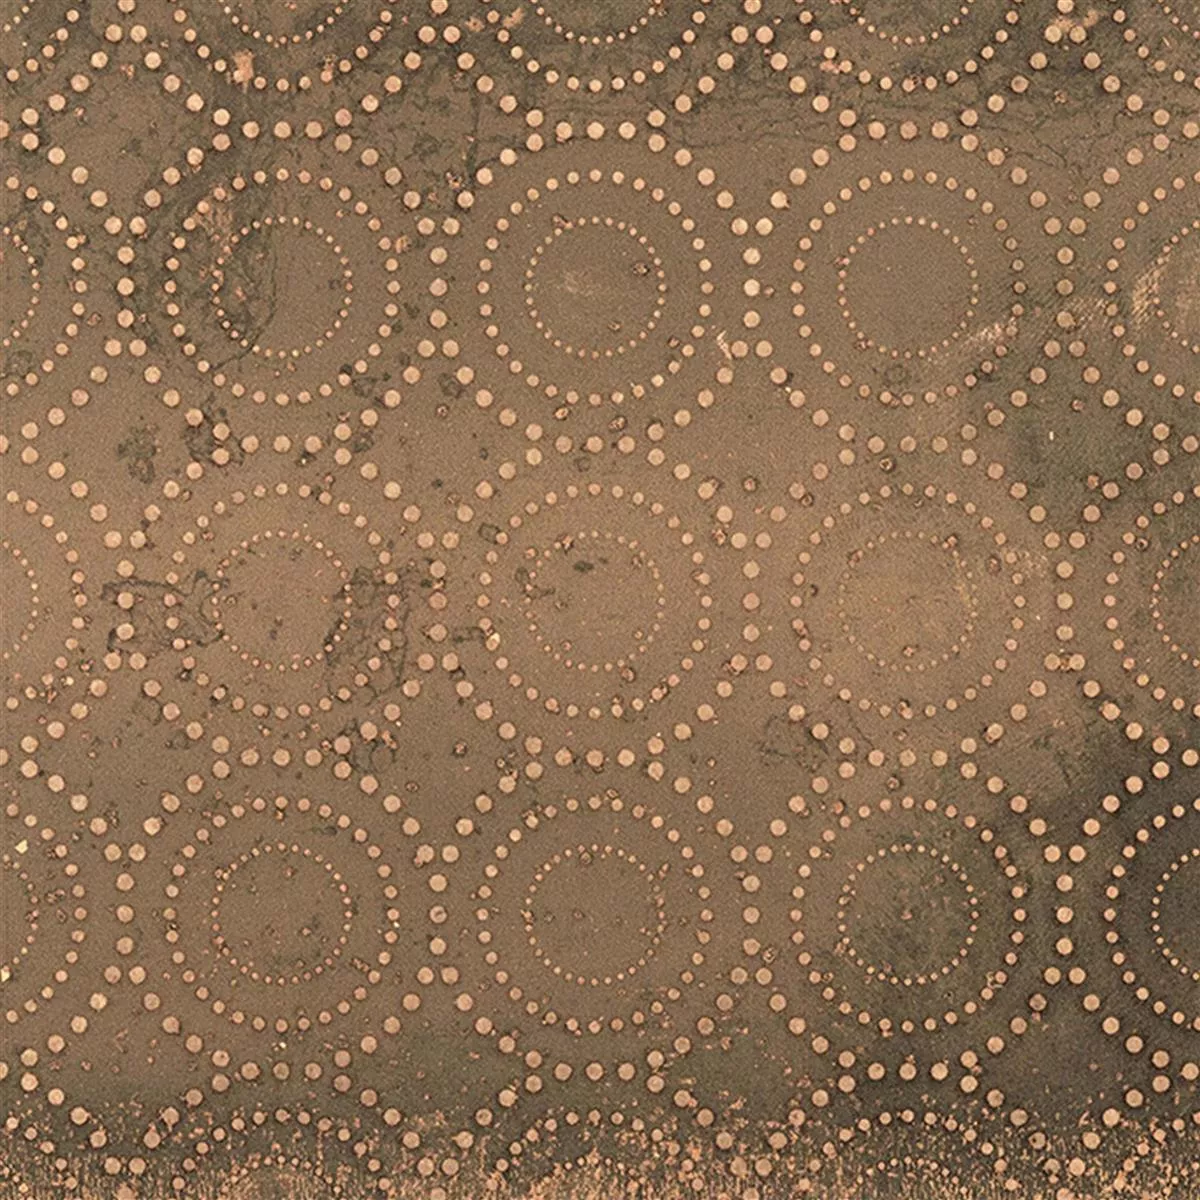 Podlahové Dlaždice Chicago Kovový Vzhled Bronzová R9 - 18,5x18,5cm - 4